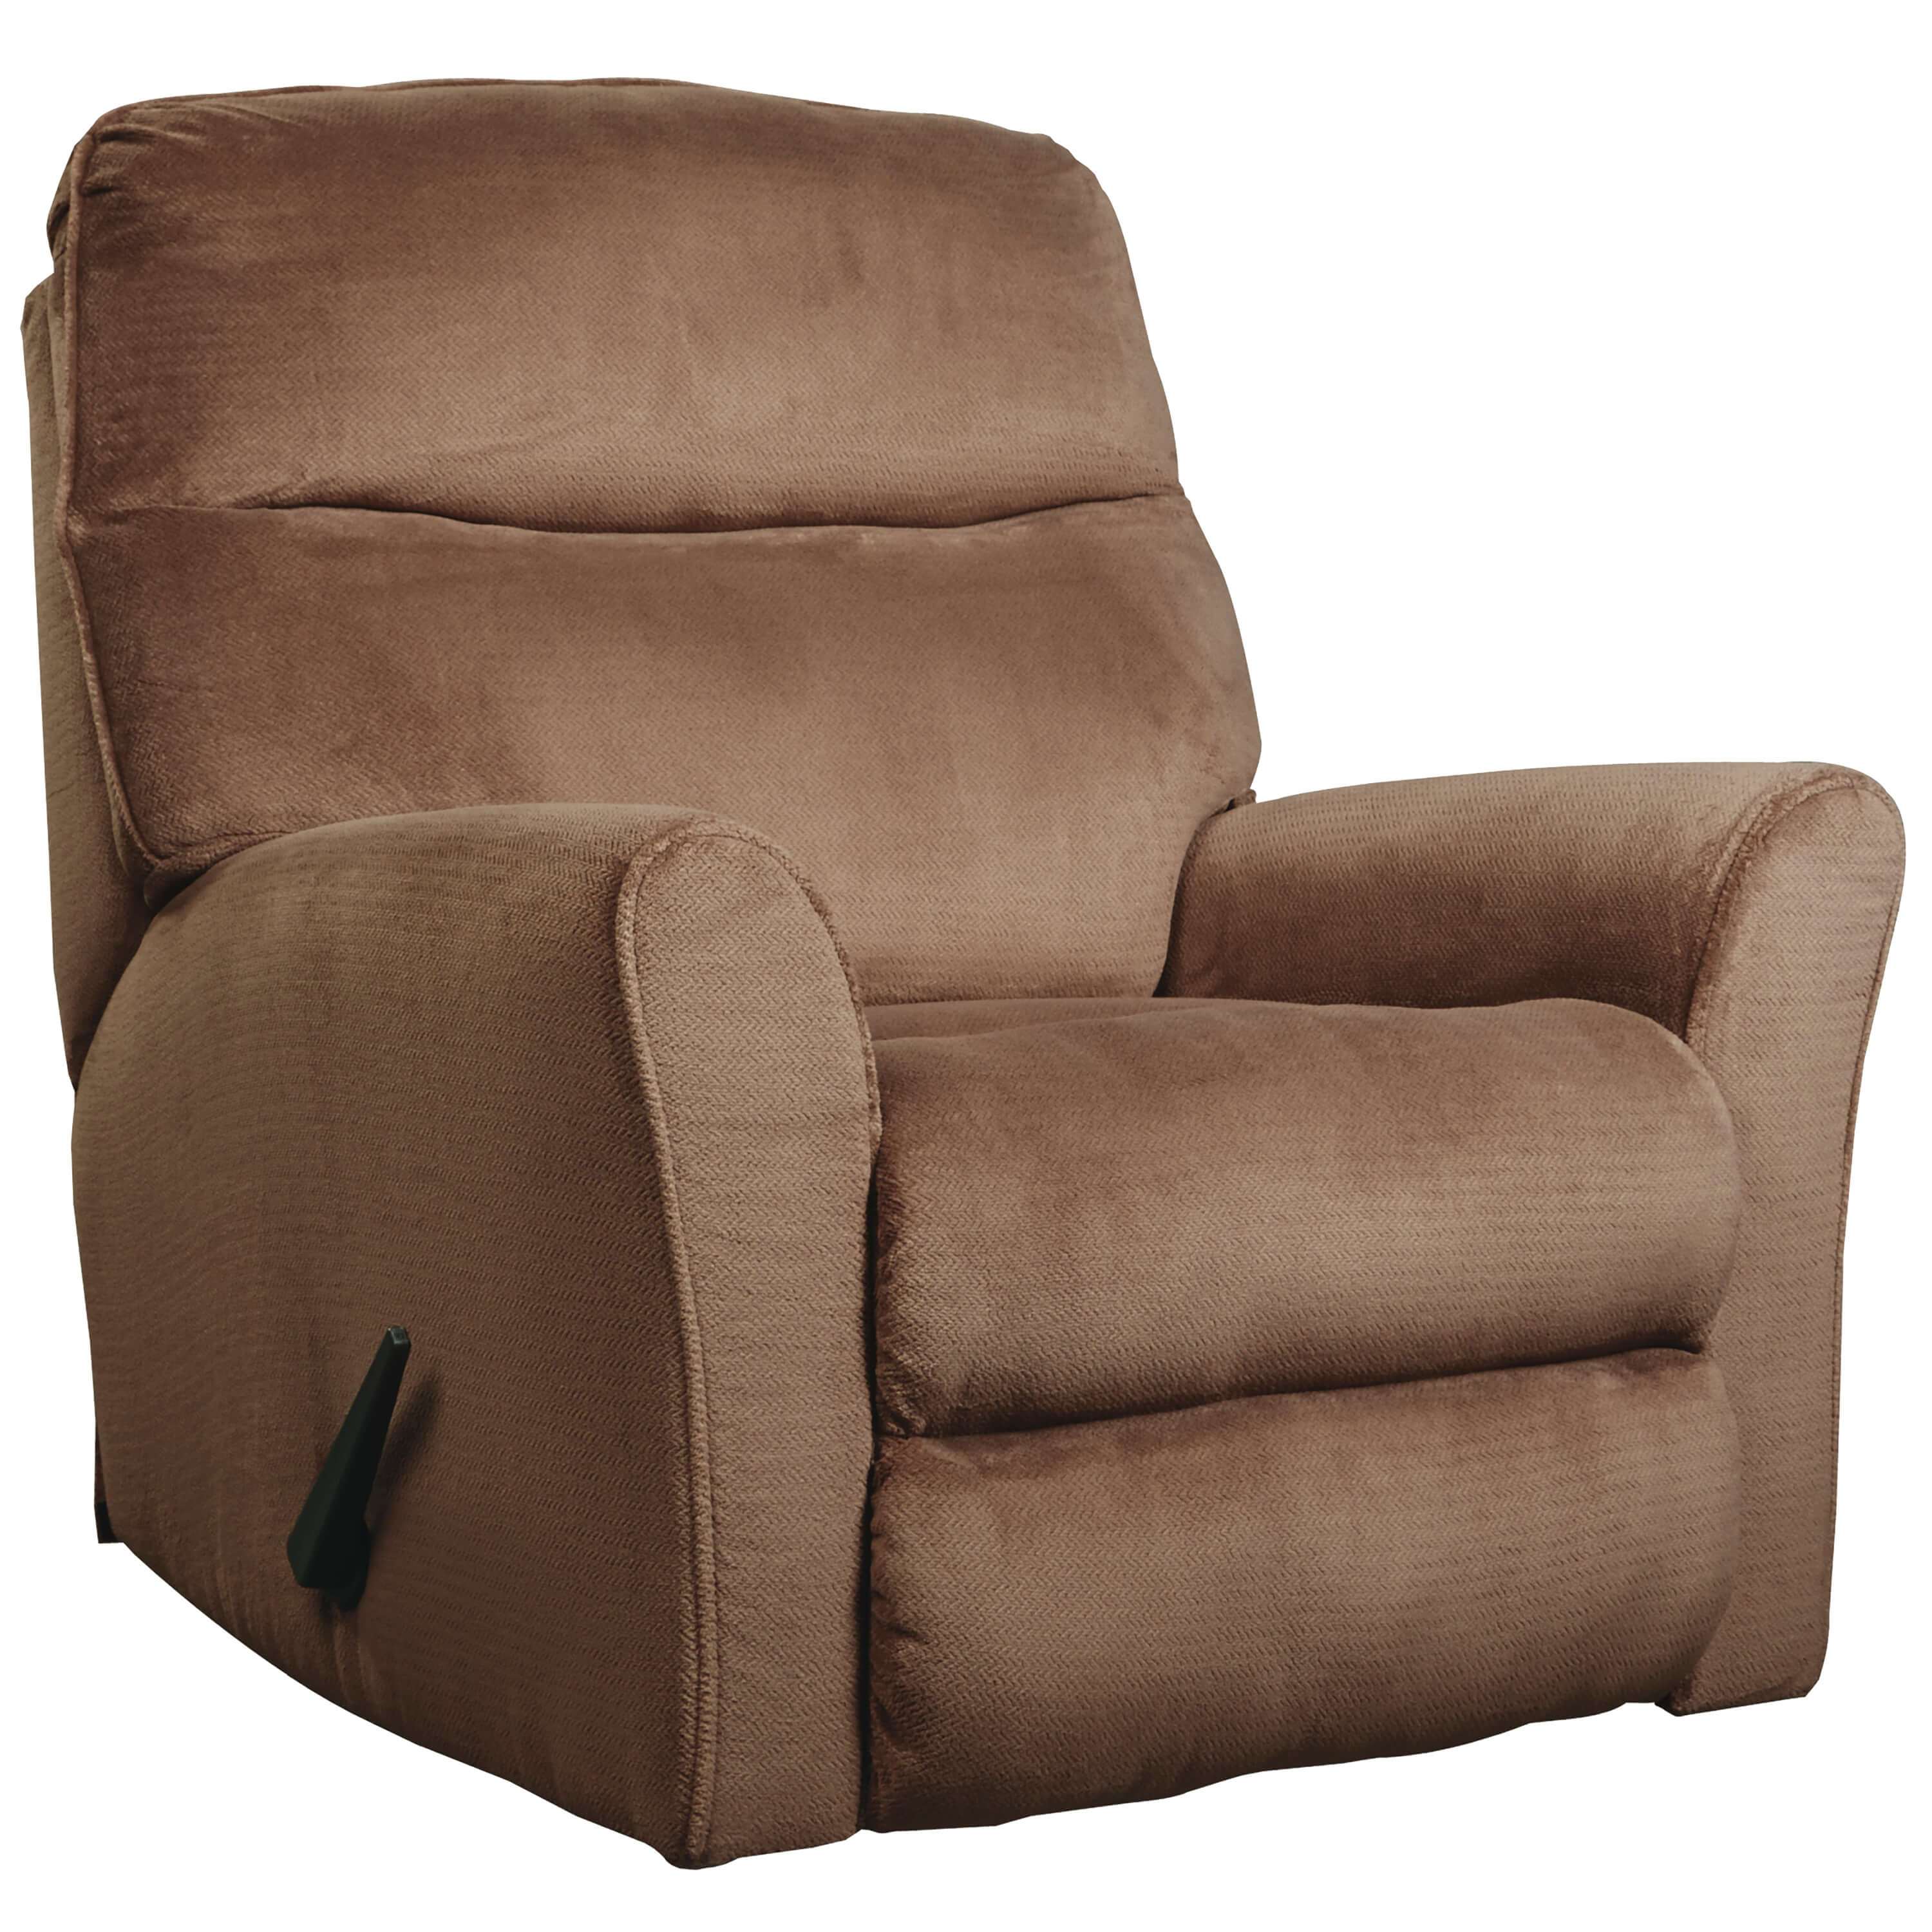 Contemporary recliners ergonomic recliner